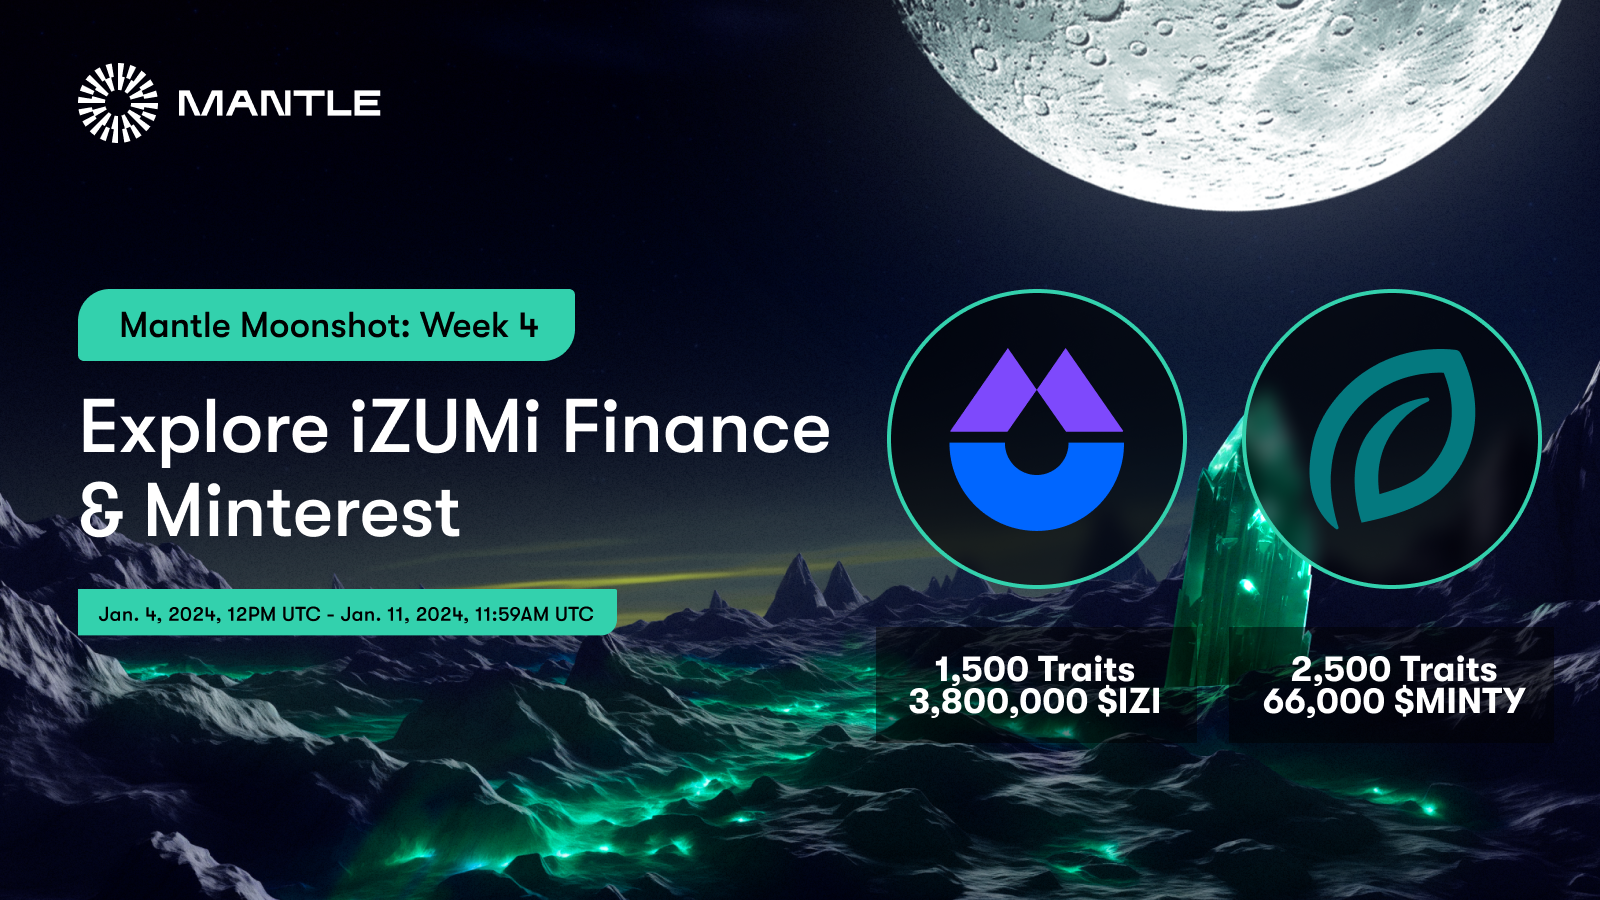 Mantle Moonshot Week 4: Explore iZUMi Finance & Minterest